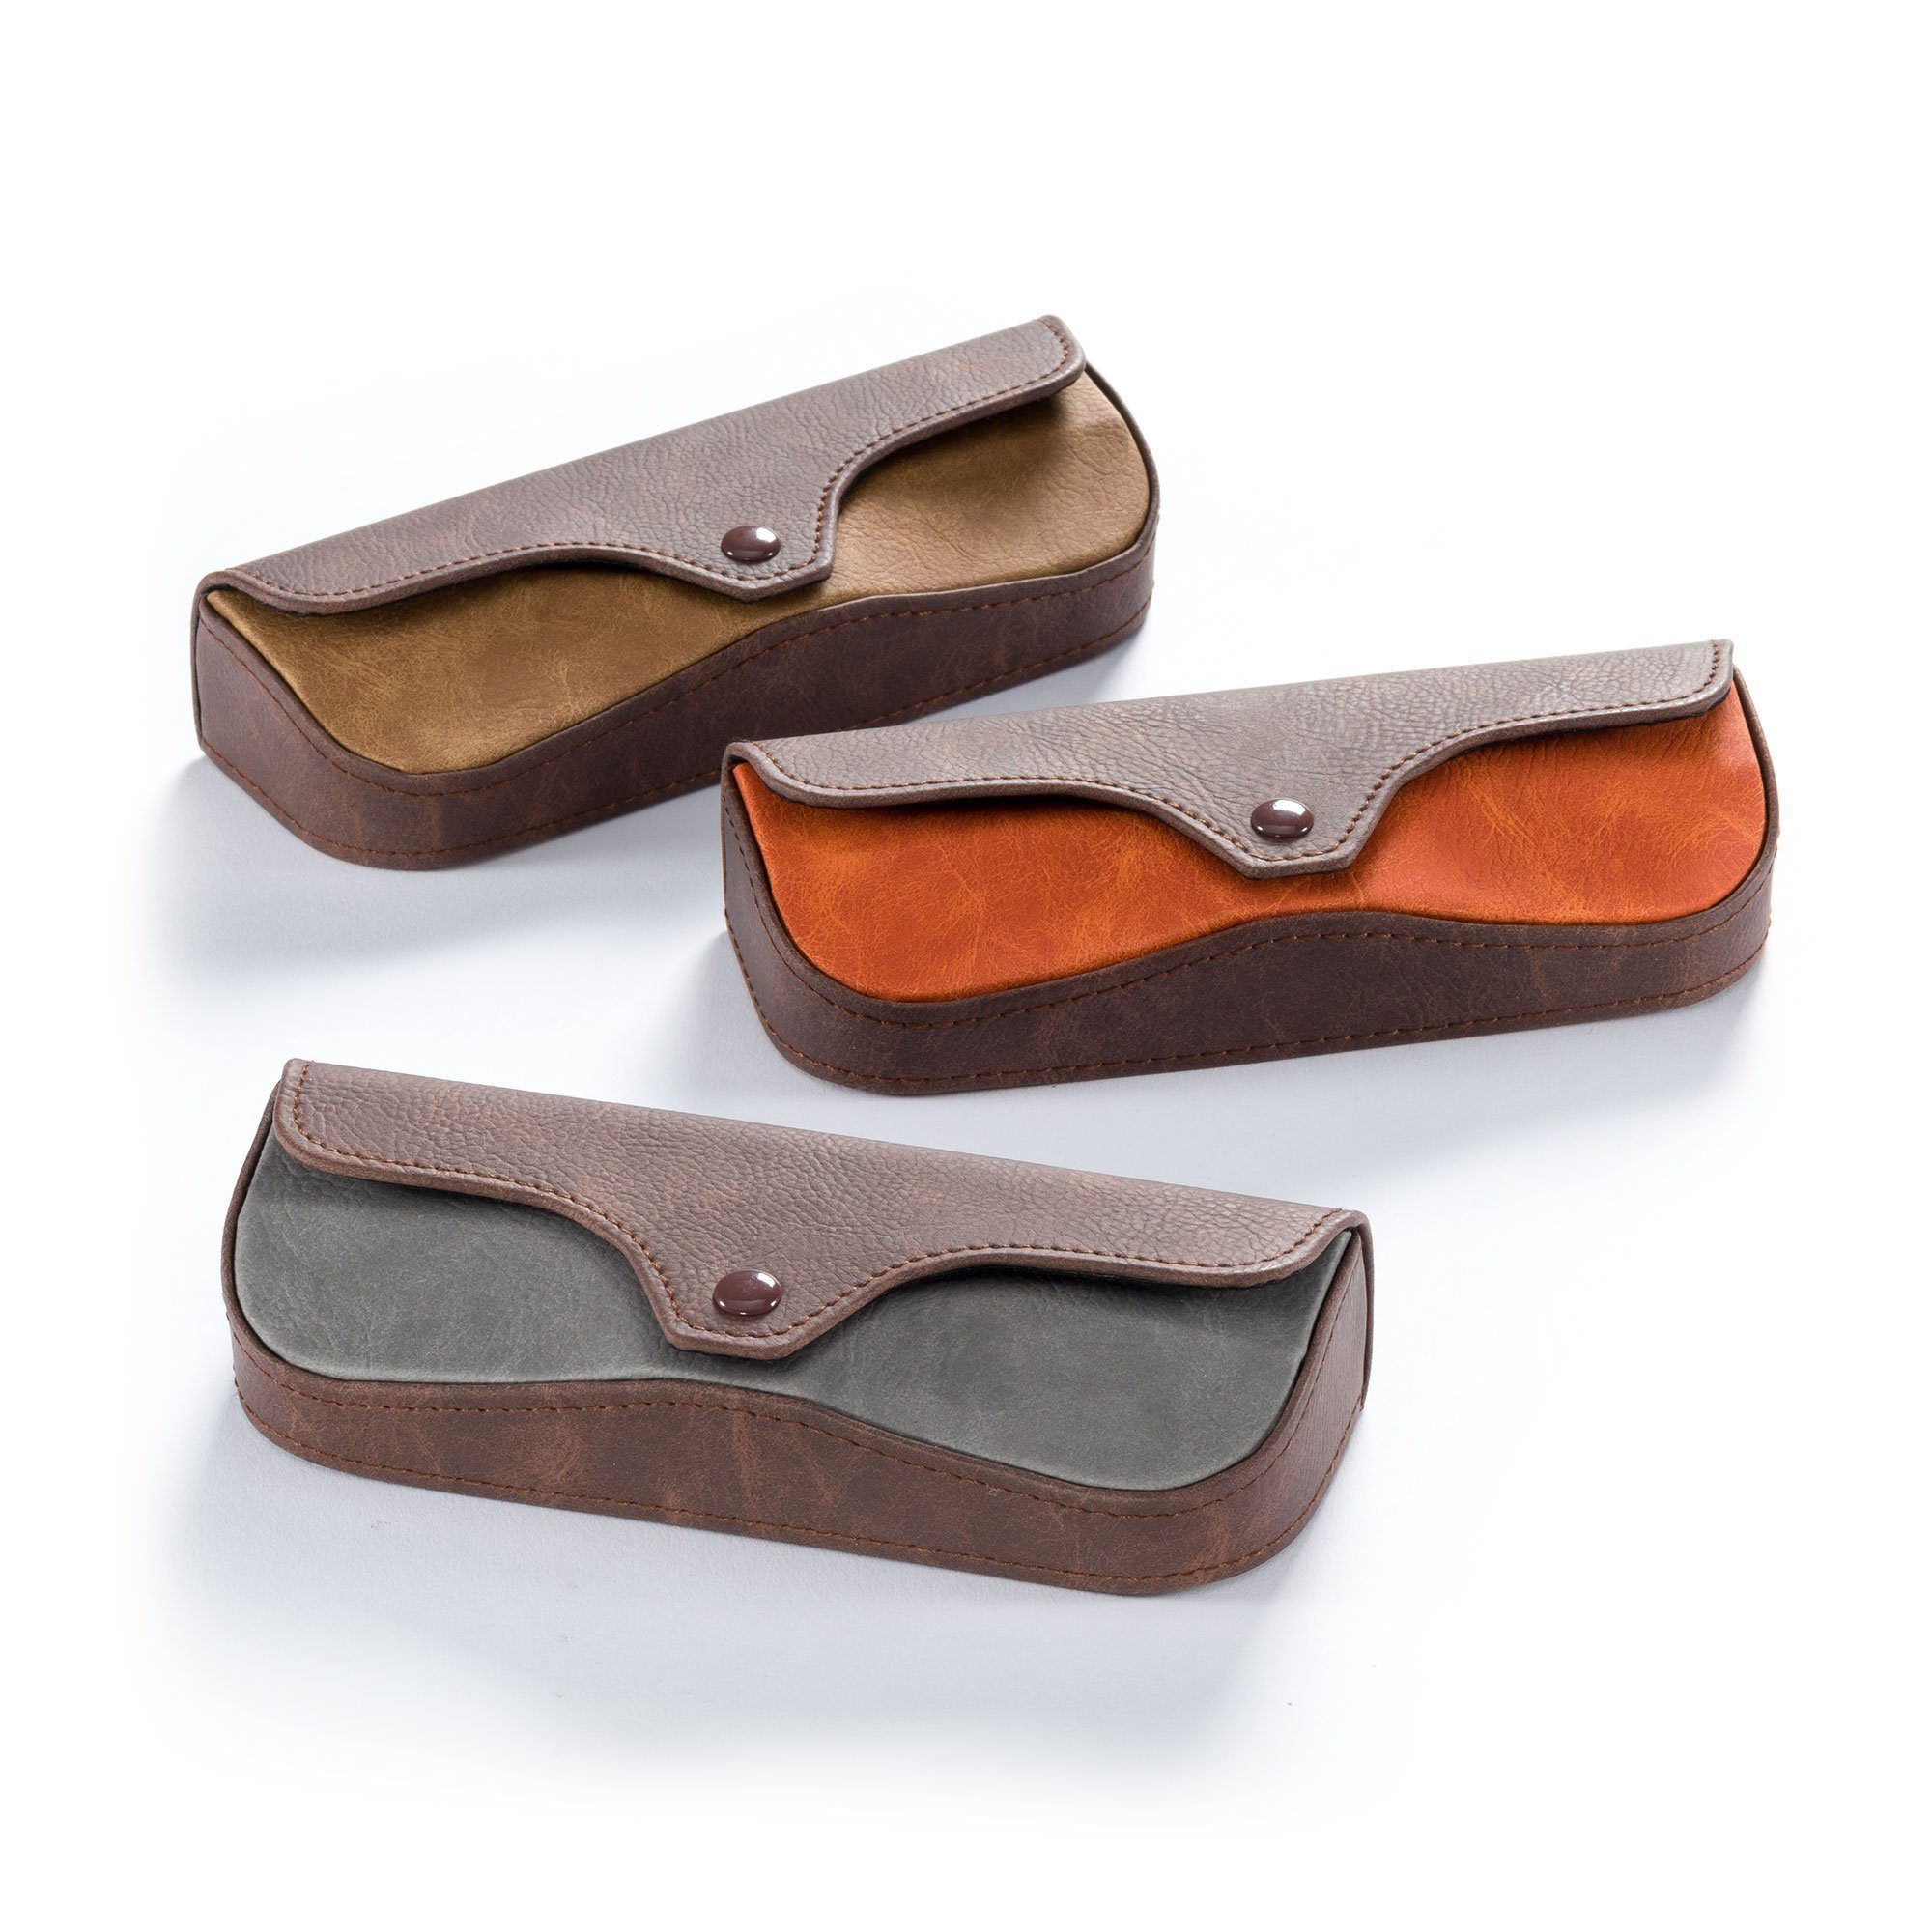 FEFI inklusive 2-Farb Mikrofasertuch Leder-Look, Brillenetui Braun/Orange im Hardcase